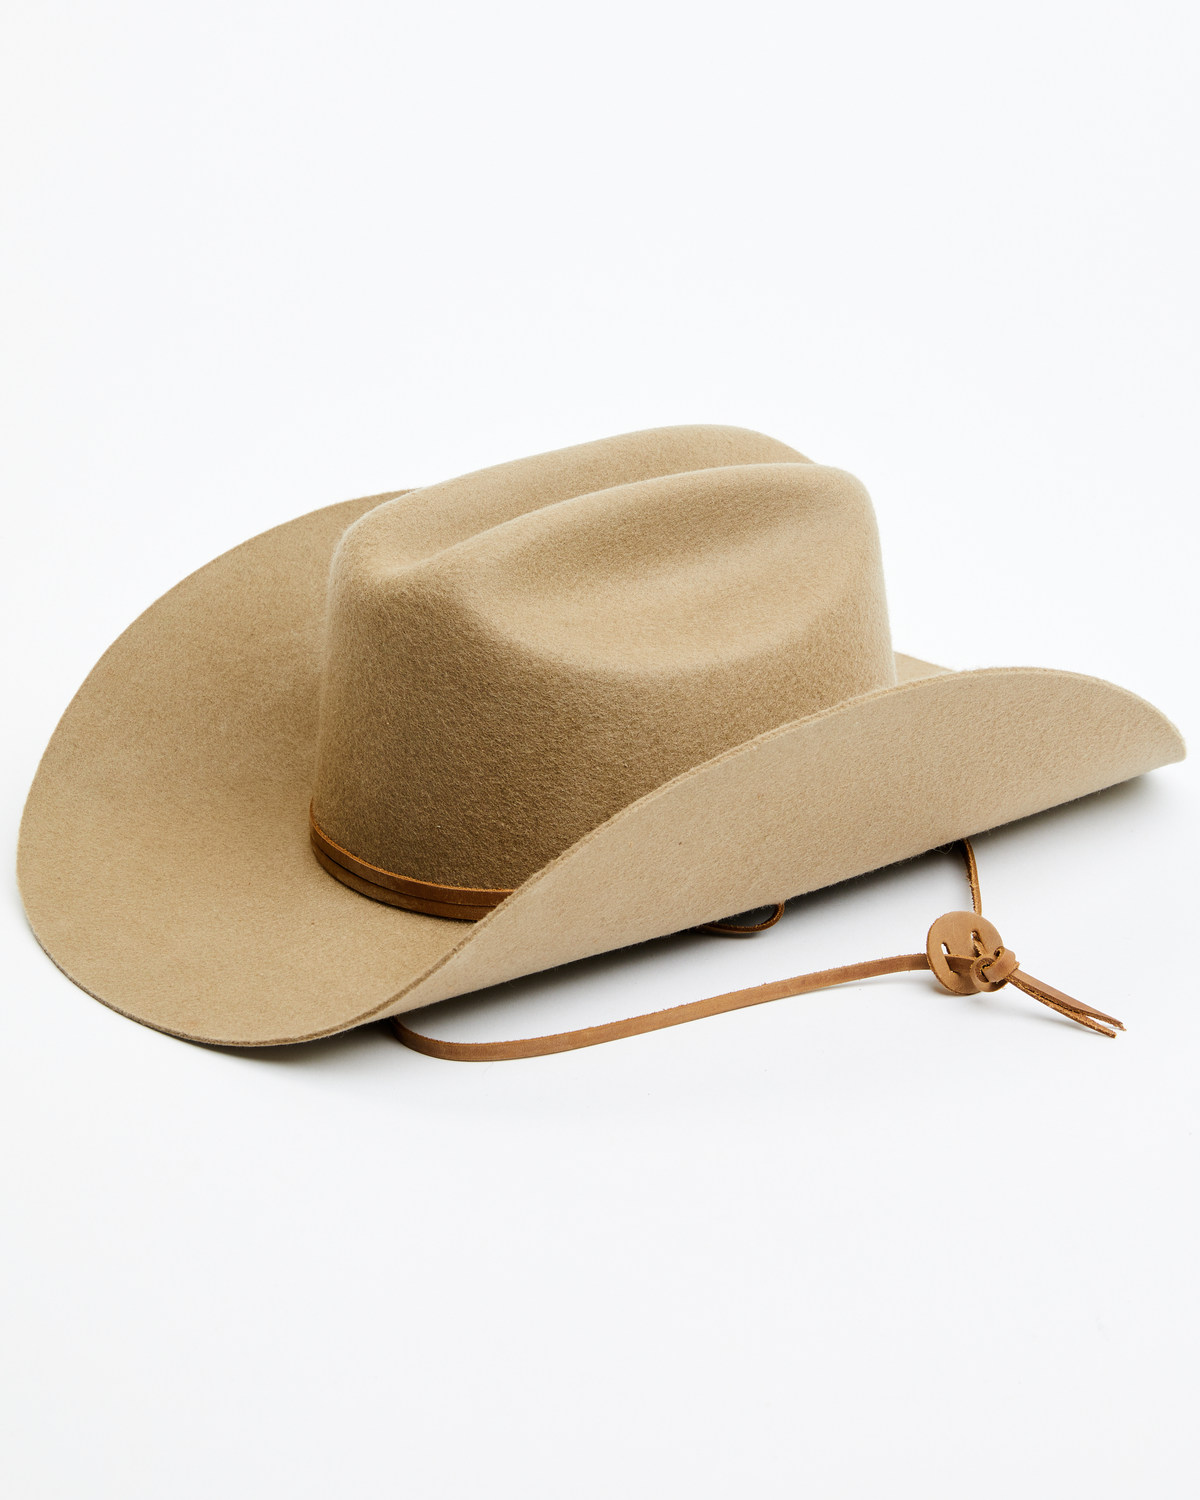 Idyllwind Women's Cumberland Felt Cowboy Hat